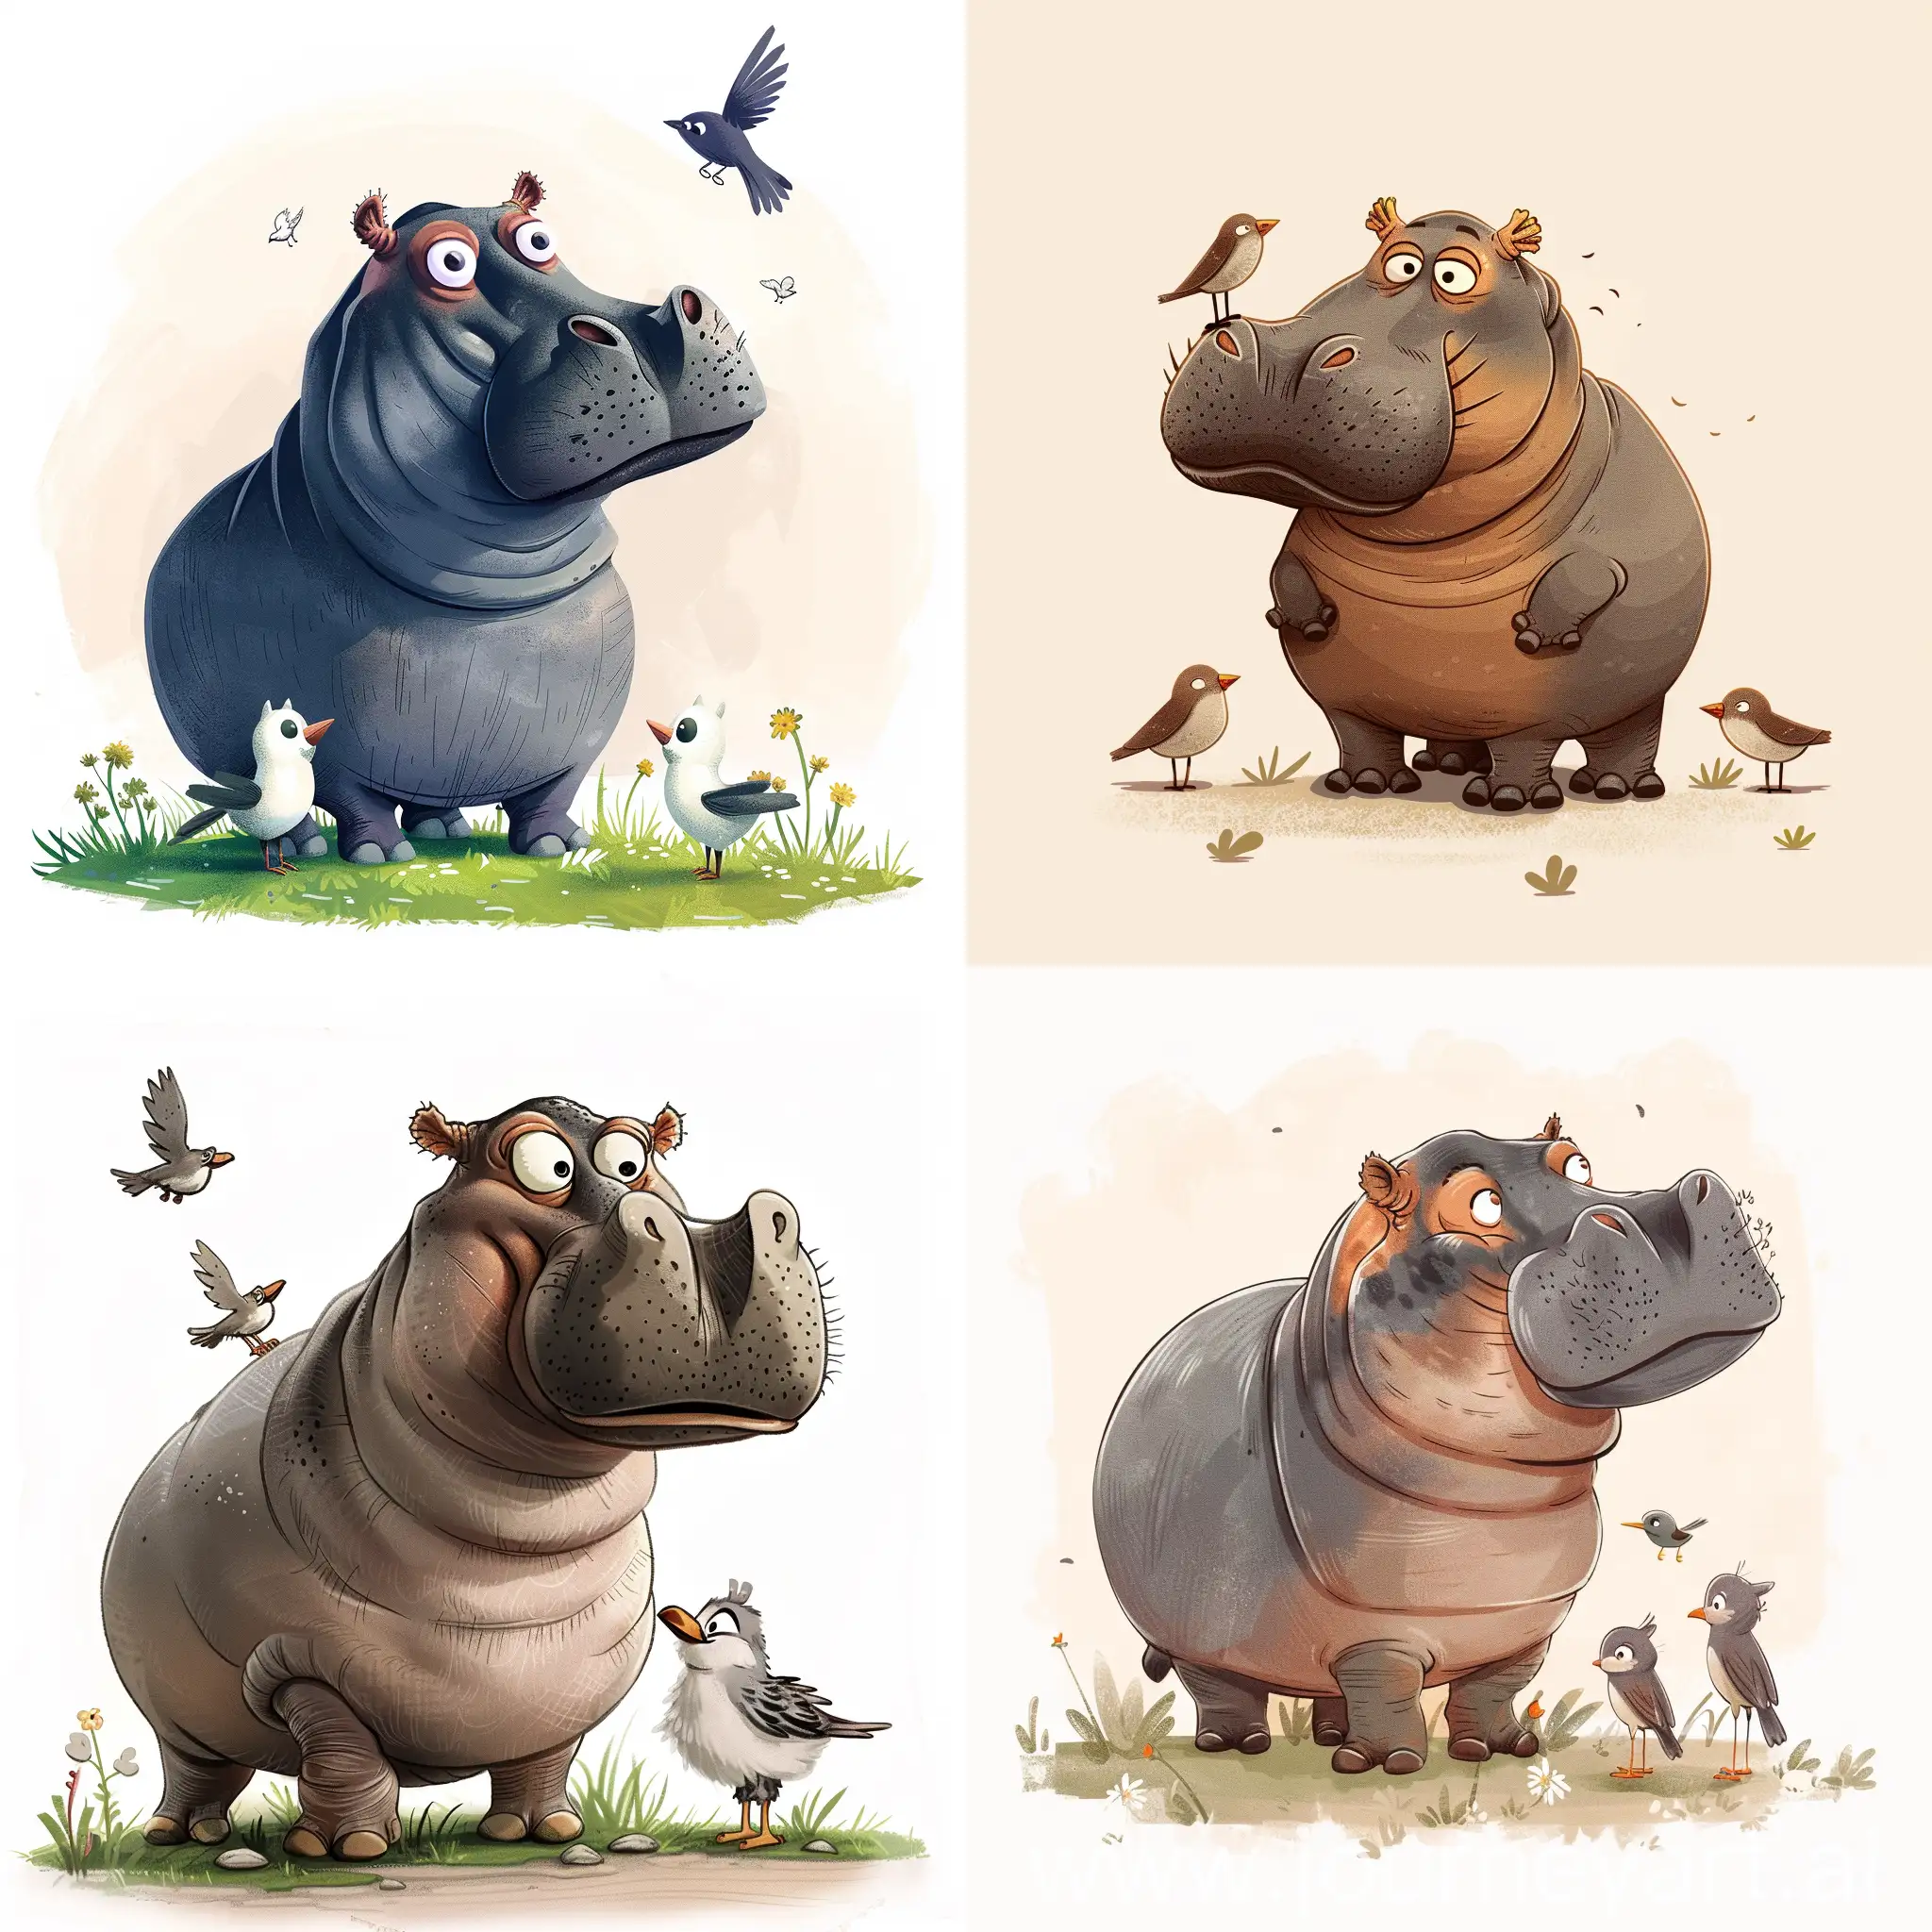 Cheerful-Hippopotamus-Avatar-with-Playful-Birds